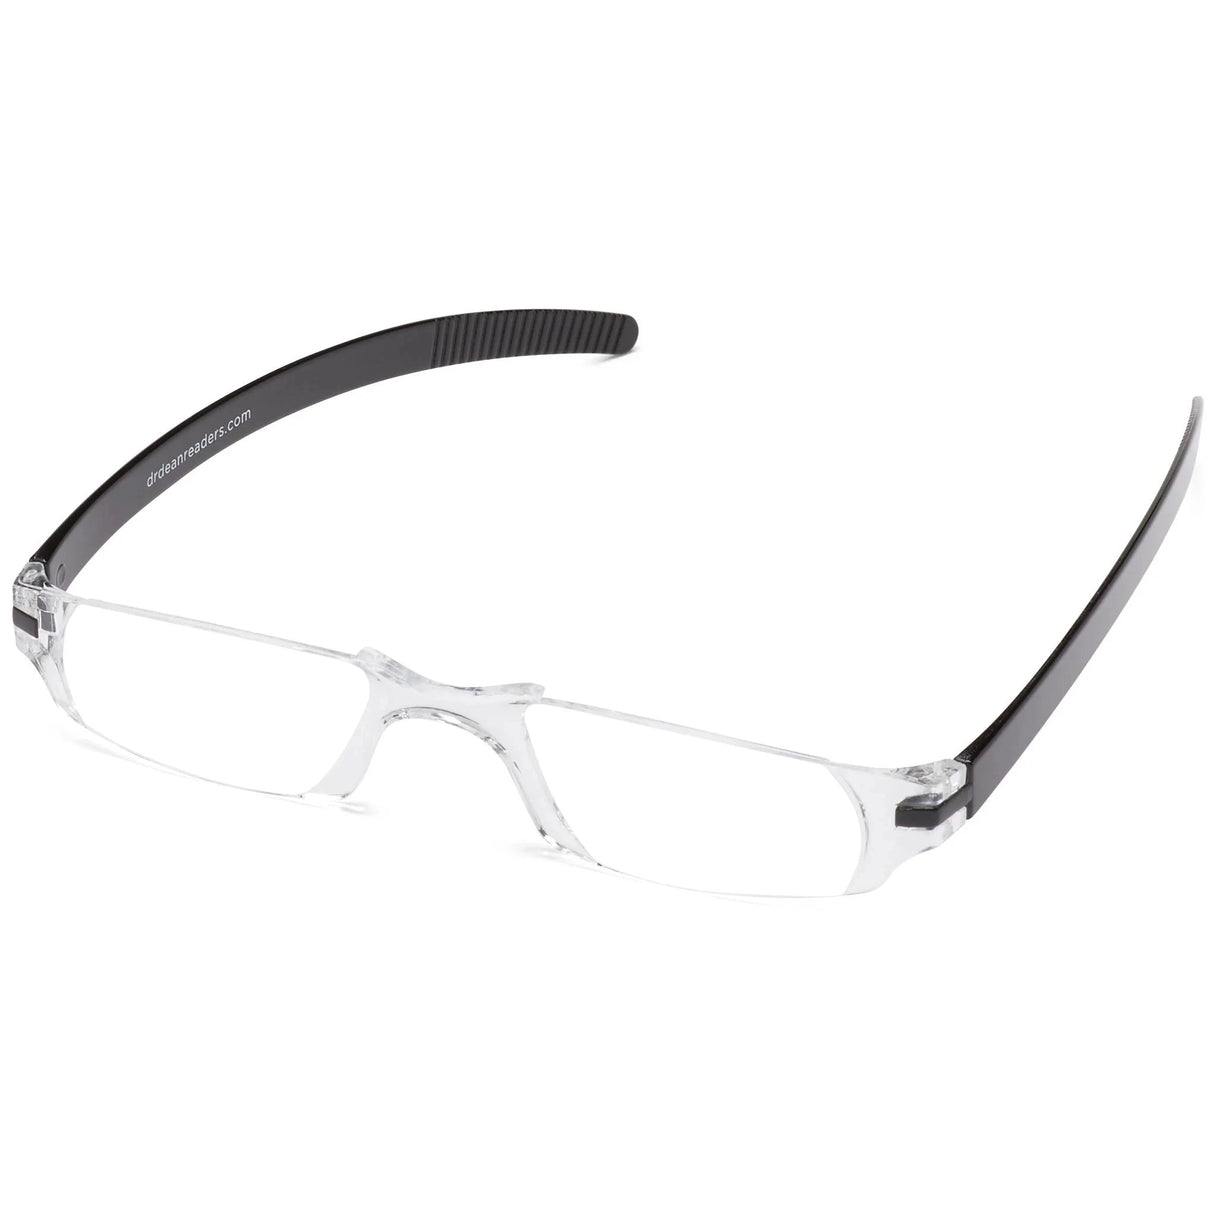 Fisherman Eyewear Slim Vision Rimless Reading Glasses, Shiny Black